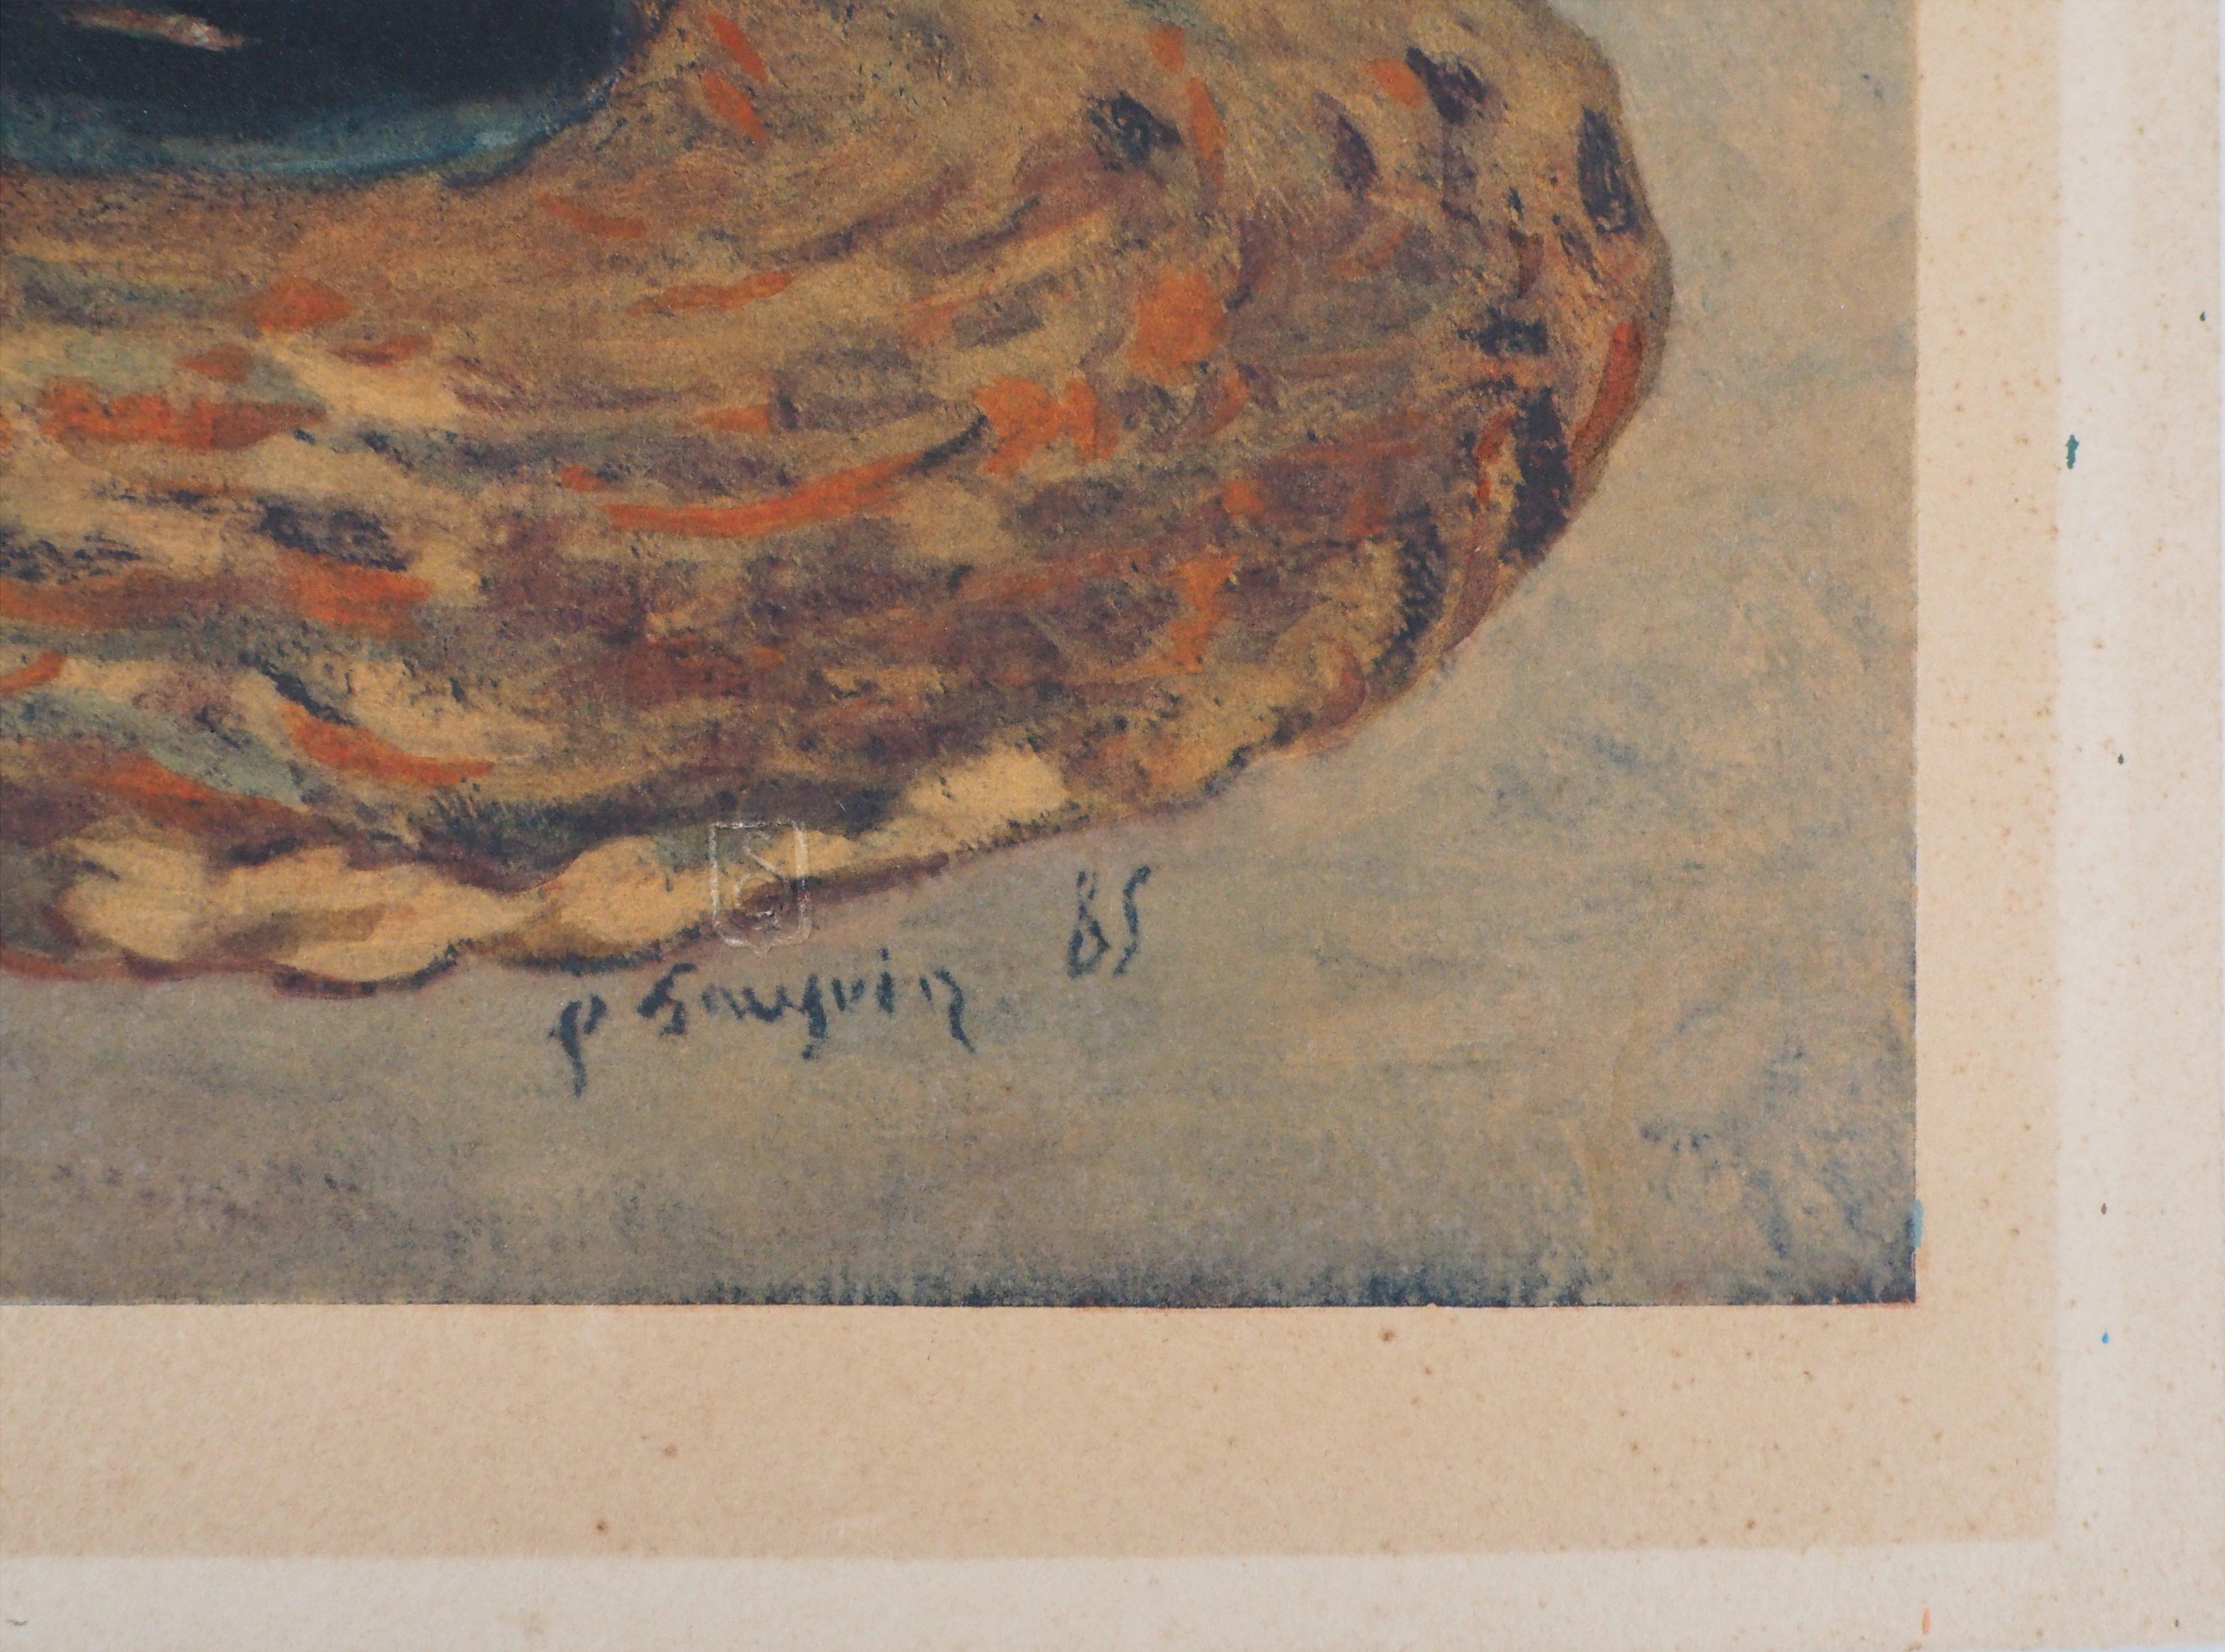 Still Life with Mandolin - Pochoir - Spitzer edition circa 1950 /250ex - Print by (after) Paul Gauguin